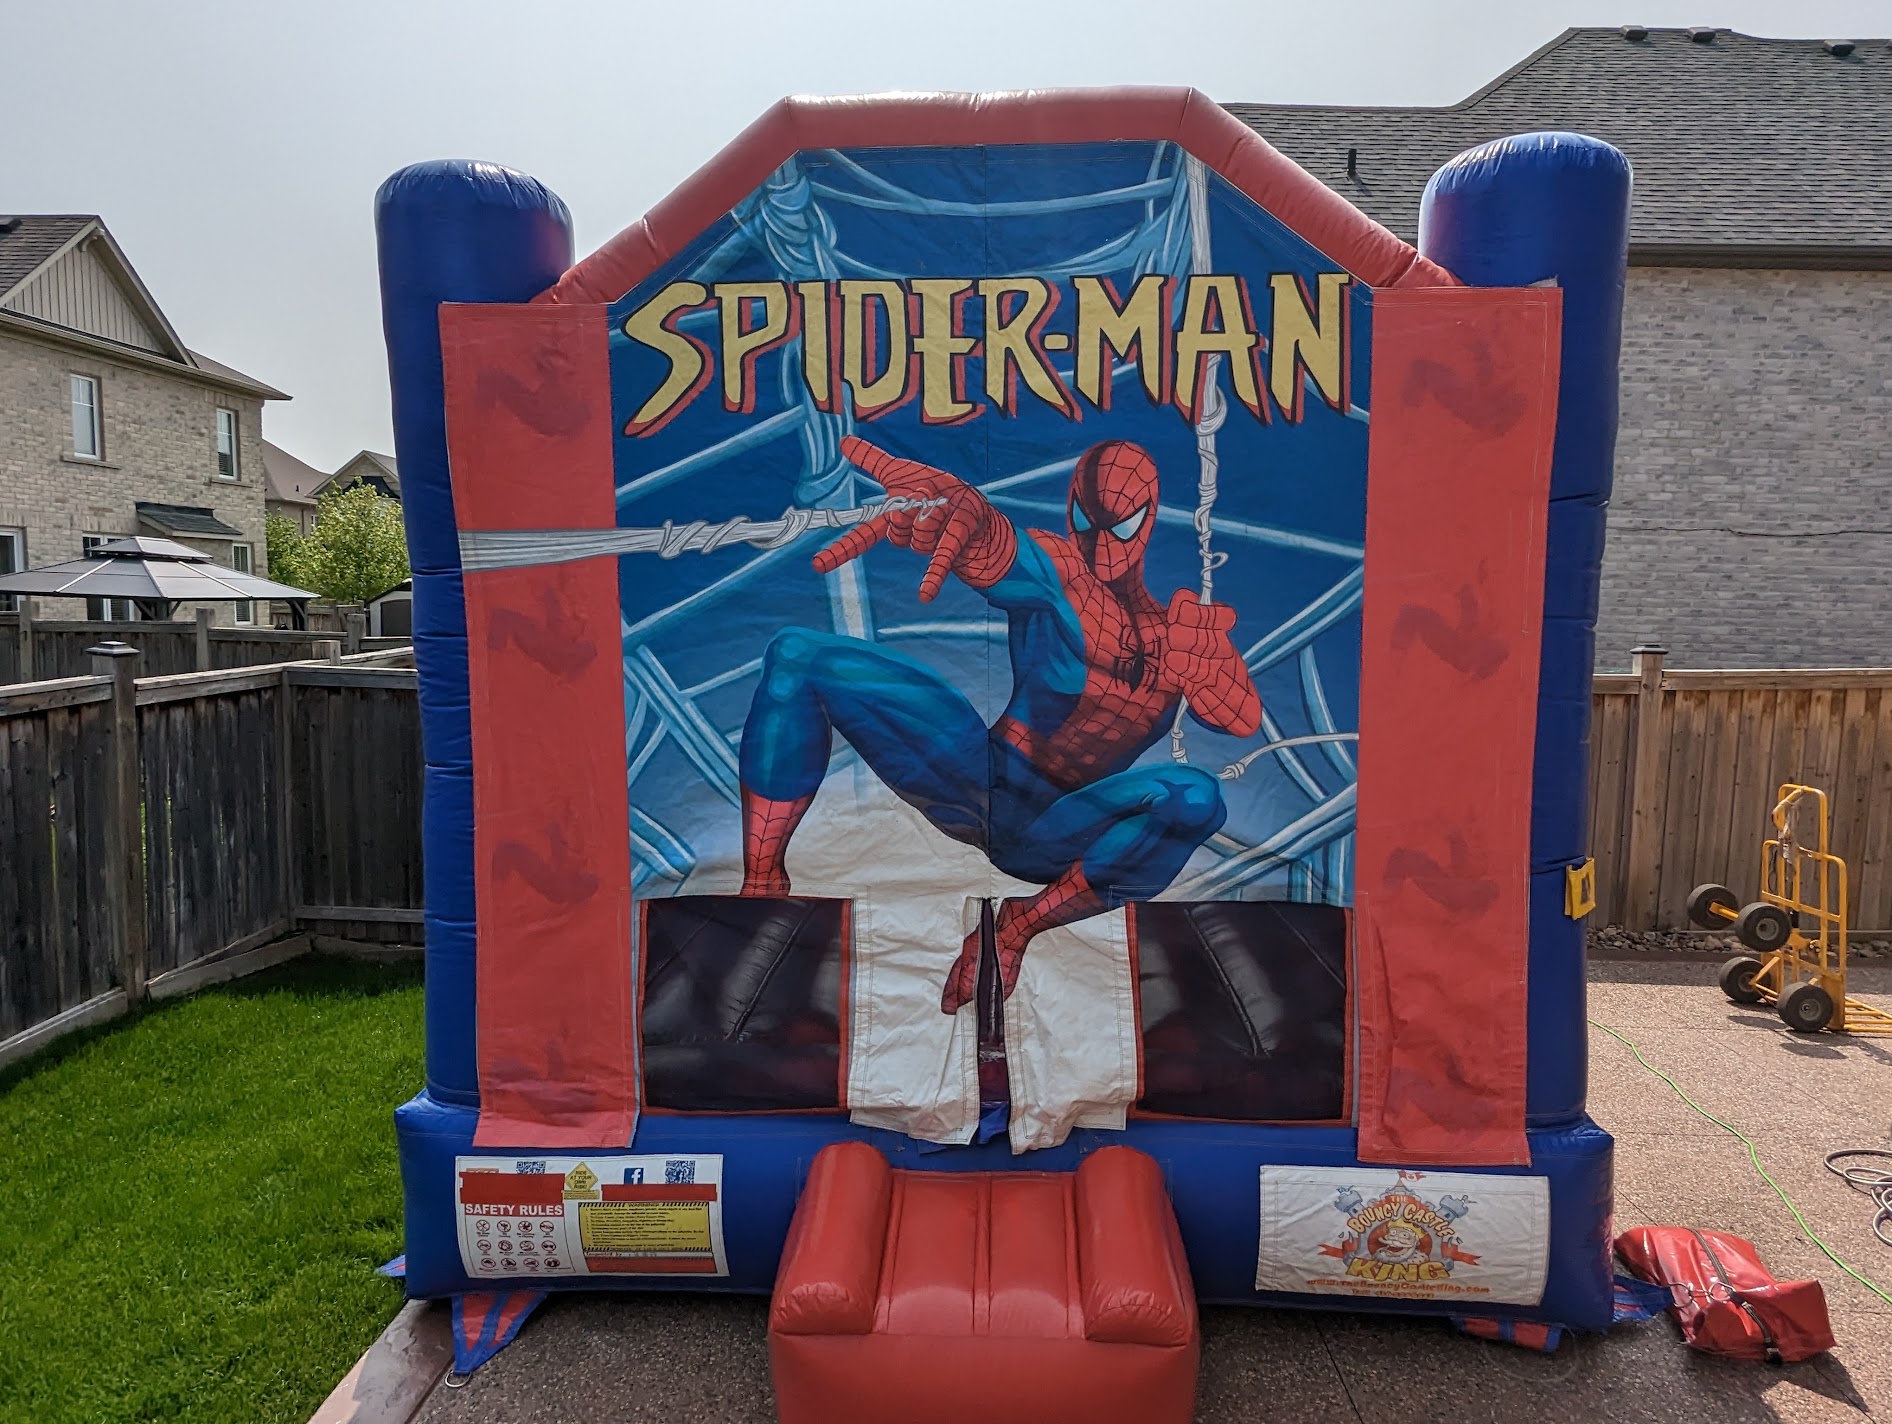 Spiderman Bouncy castle rental